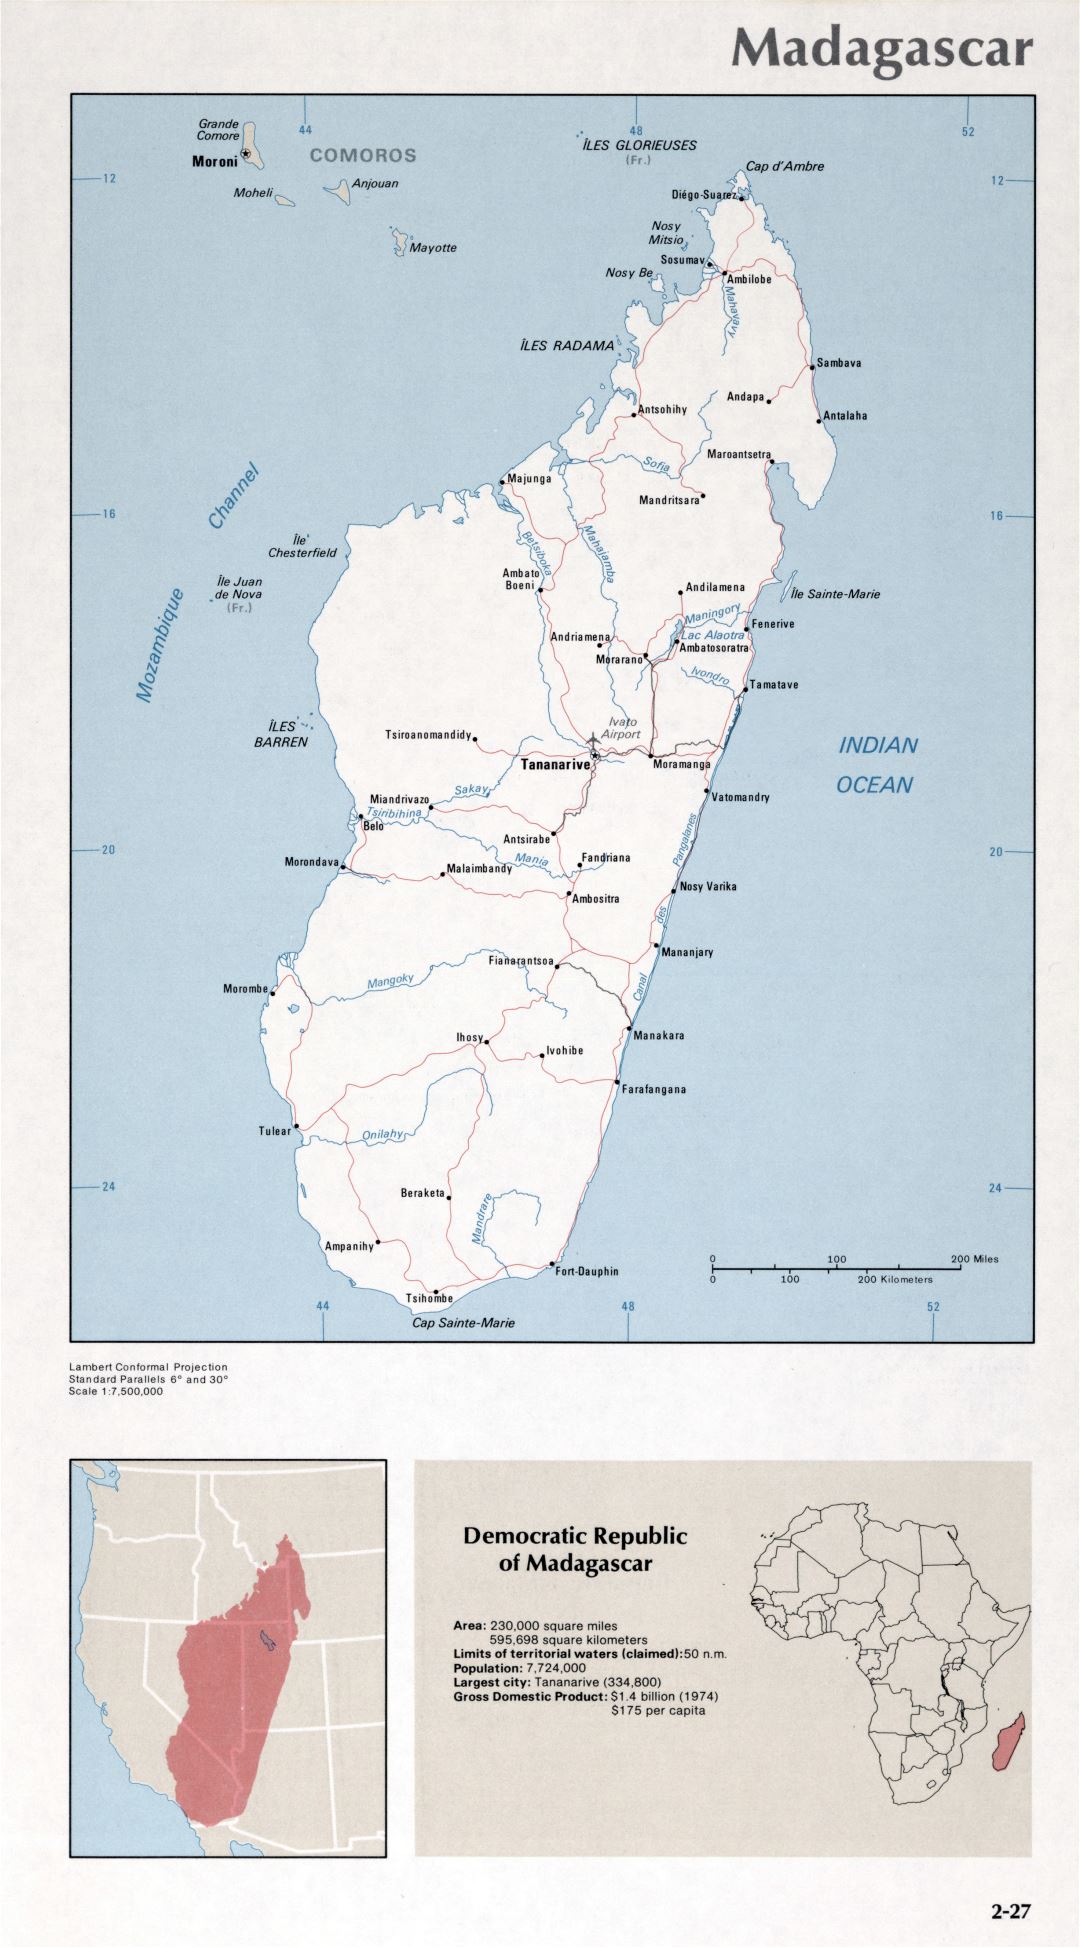 Map of Madagascar (2-27)